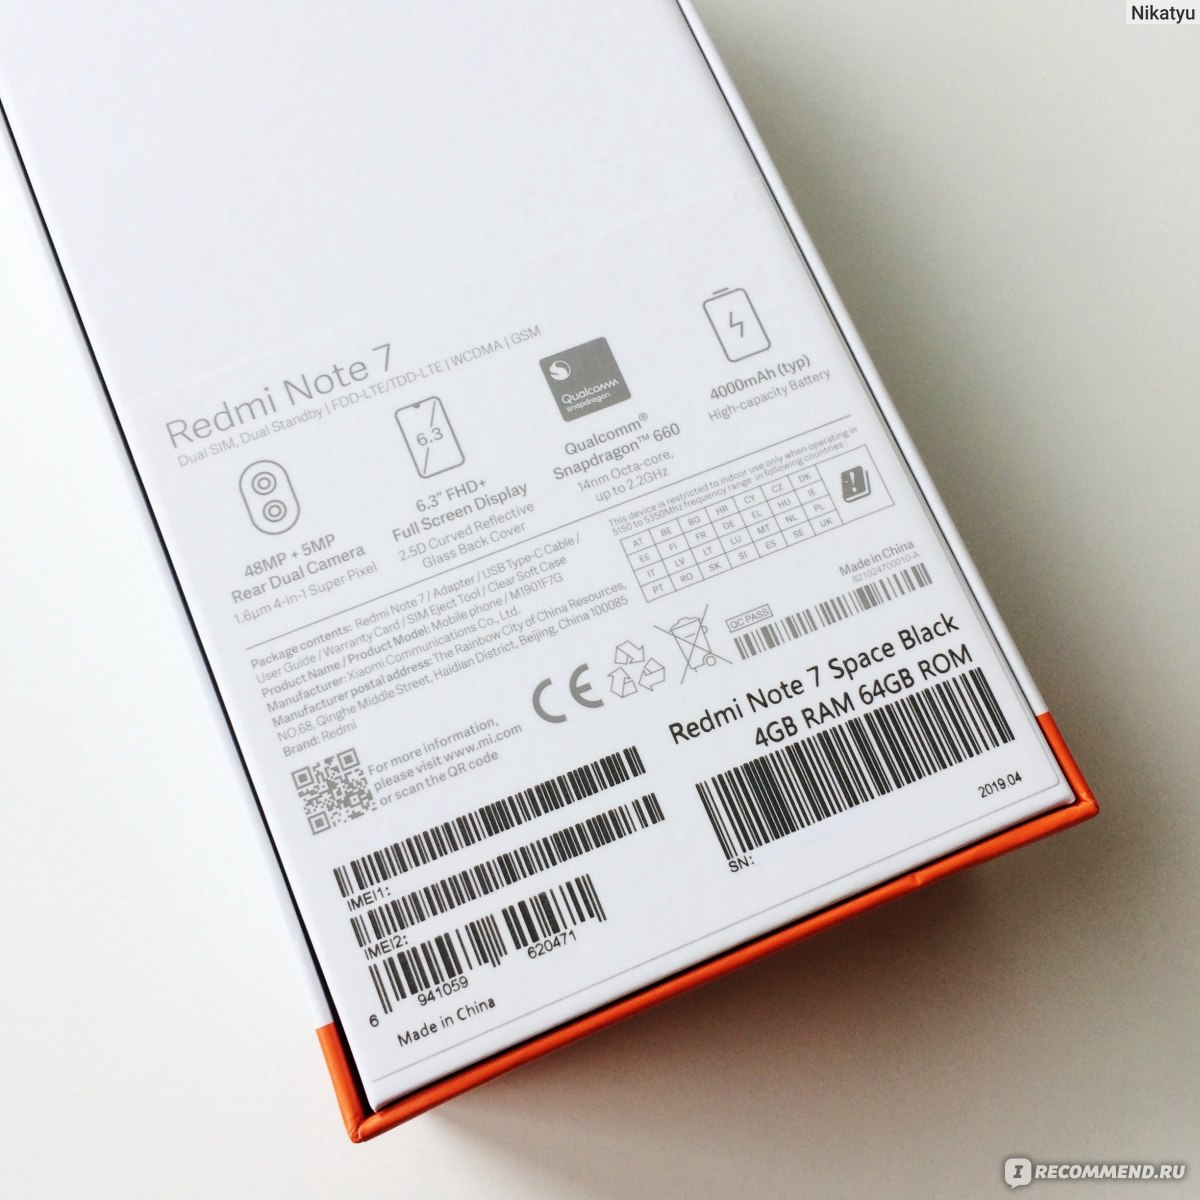 Xiaomi 14 ростест. Redmi Note 9 коробка IMEI. 10 S Xiaomi коробка Note. Xiaomi Redmi Note 9s коробка. Xiaomi Redmi Note 7 коробка.